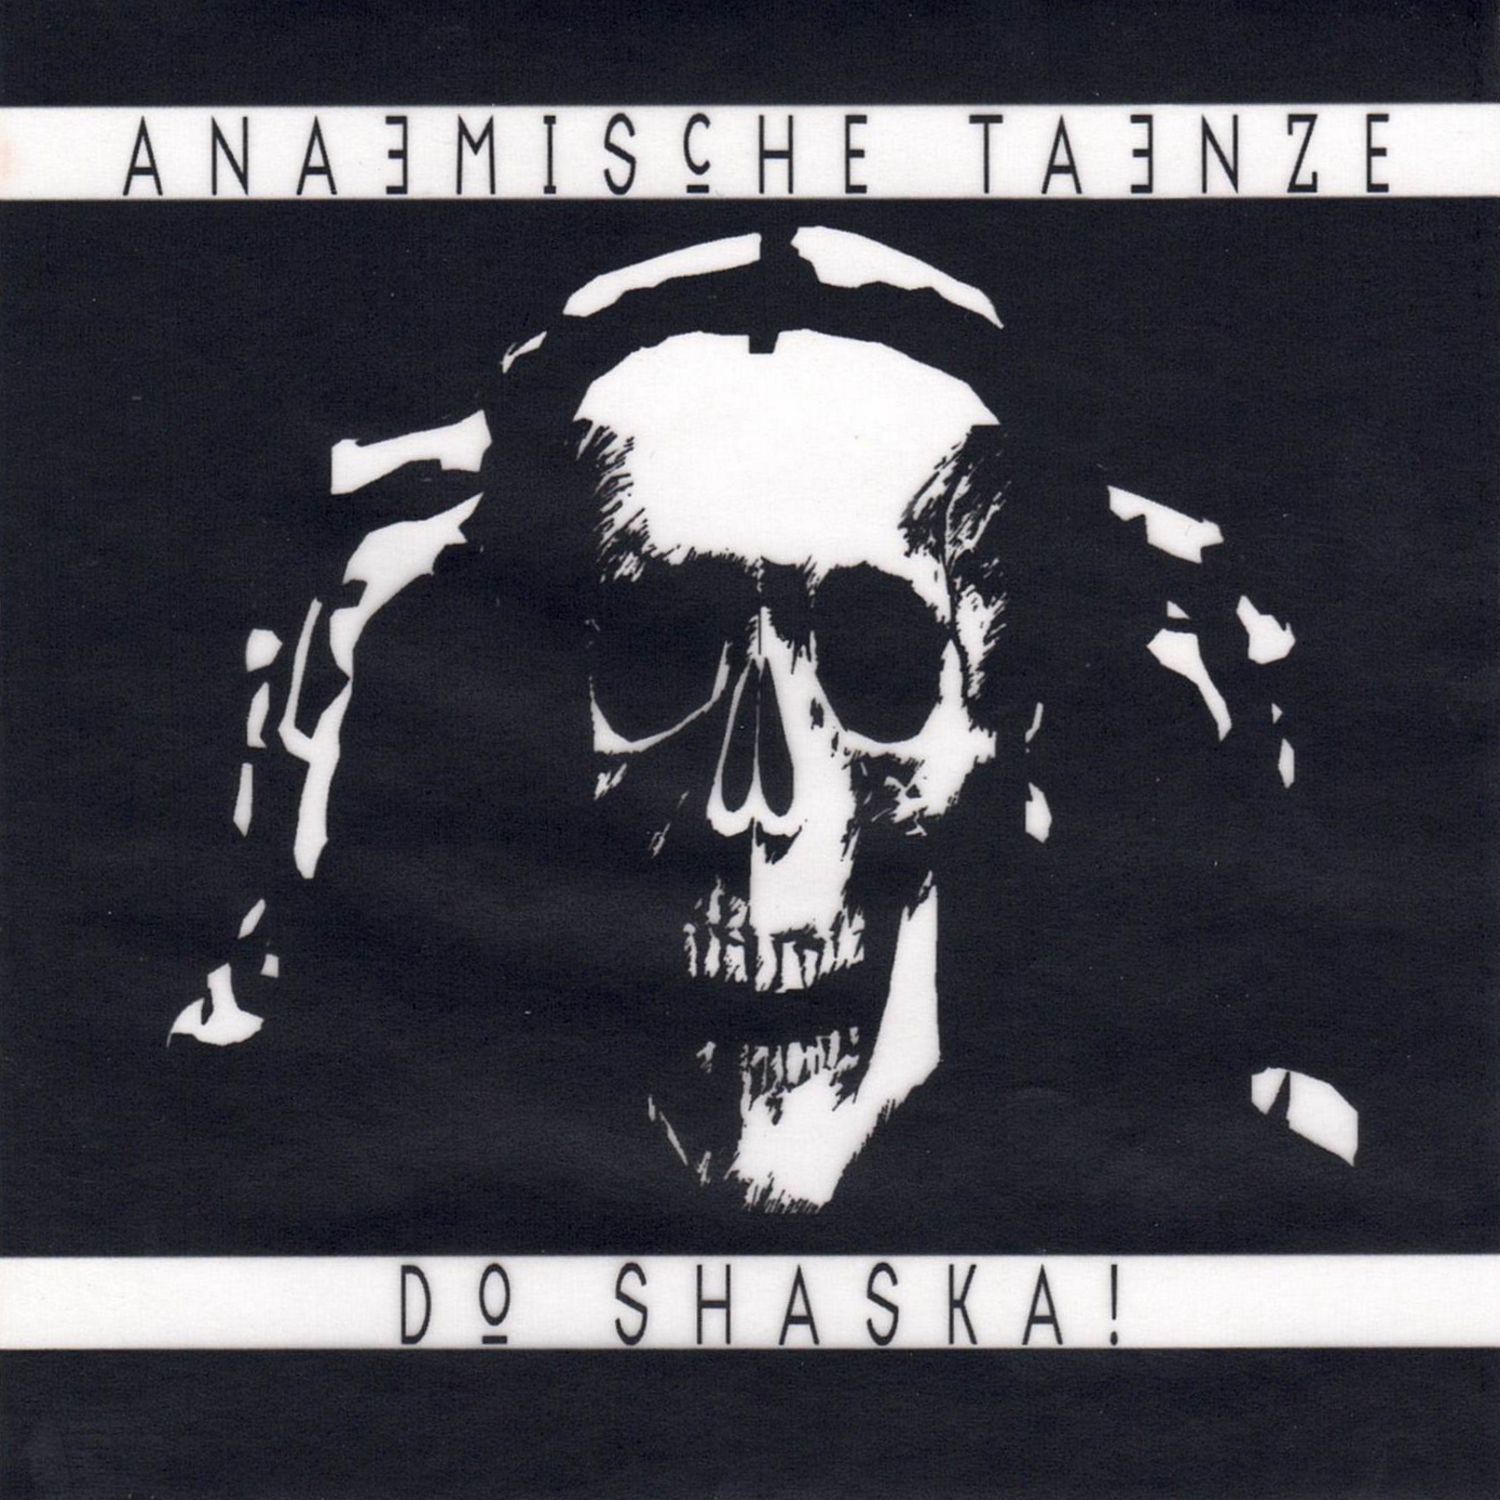 CD Shop - DO SHASKA! ANAEMISCHE TAENZE